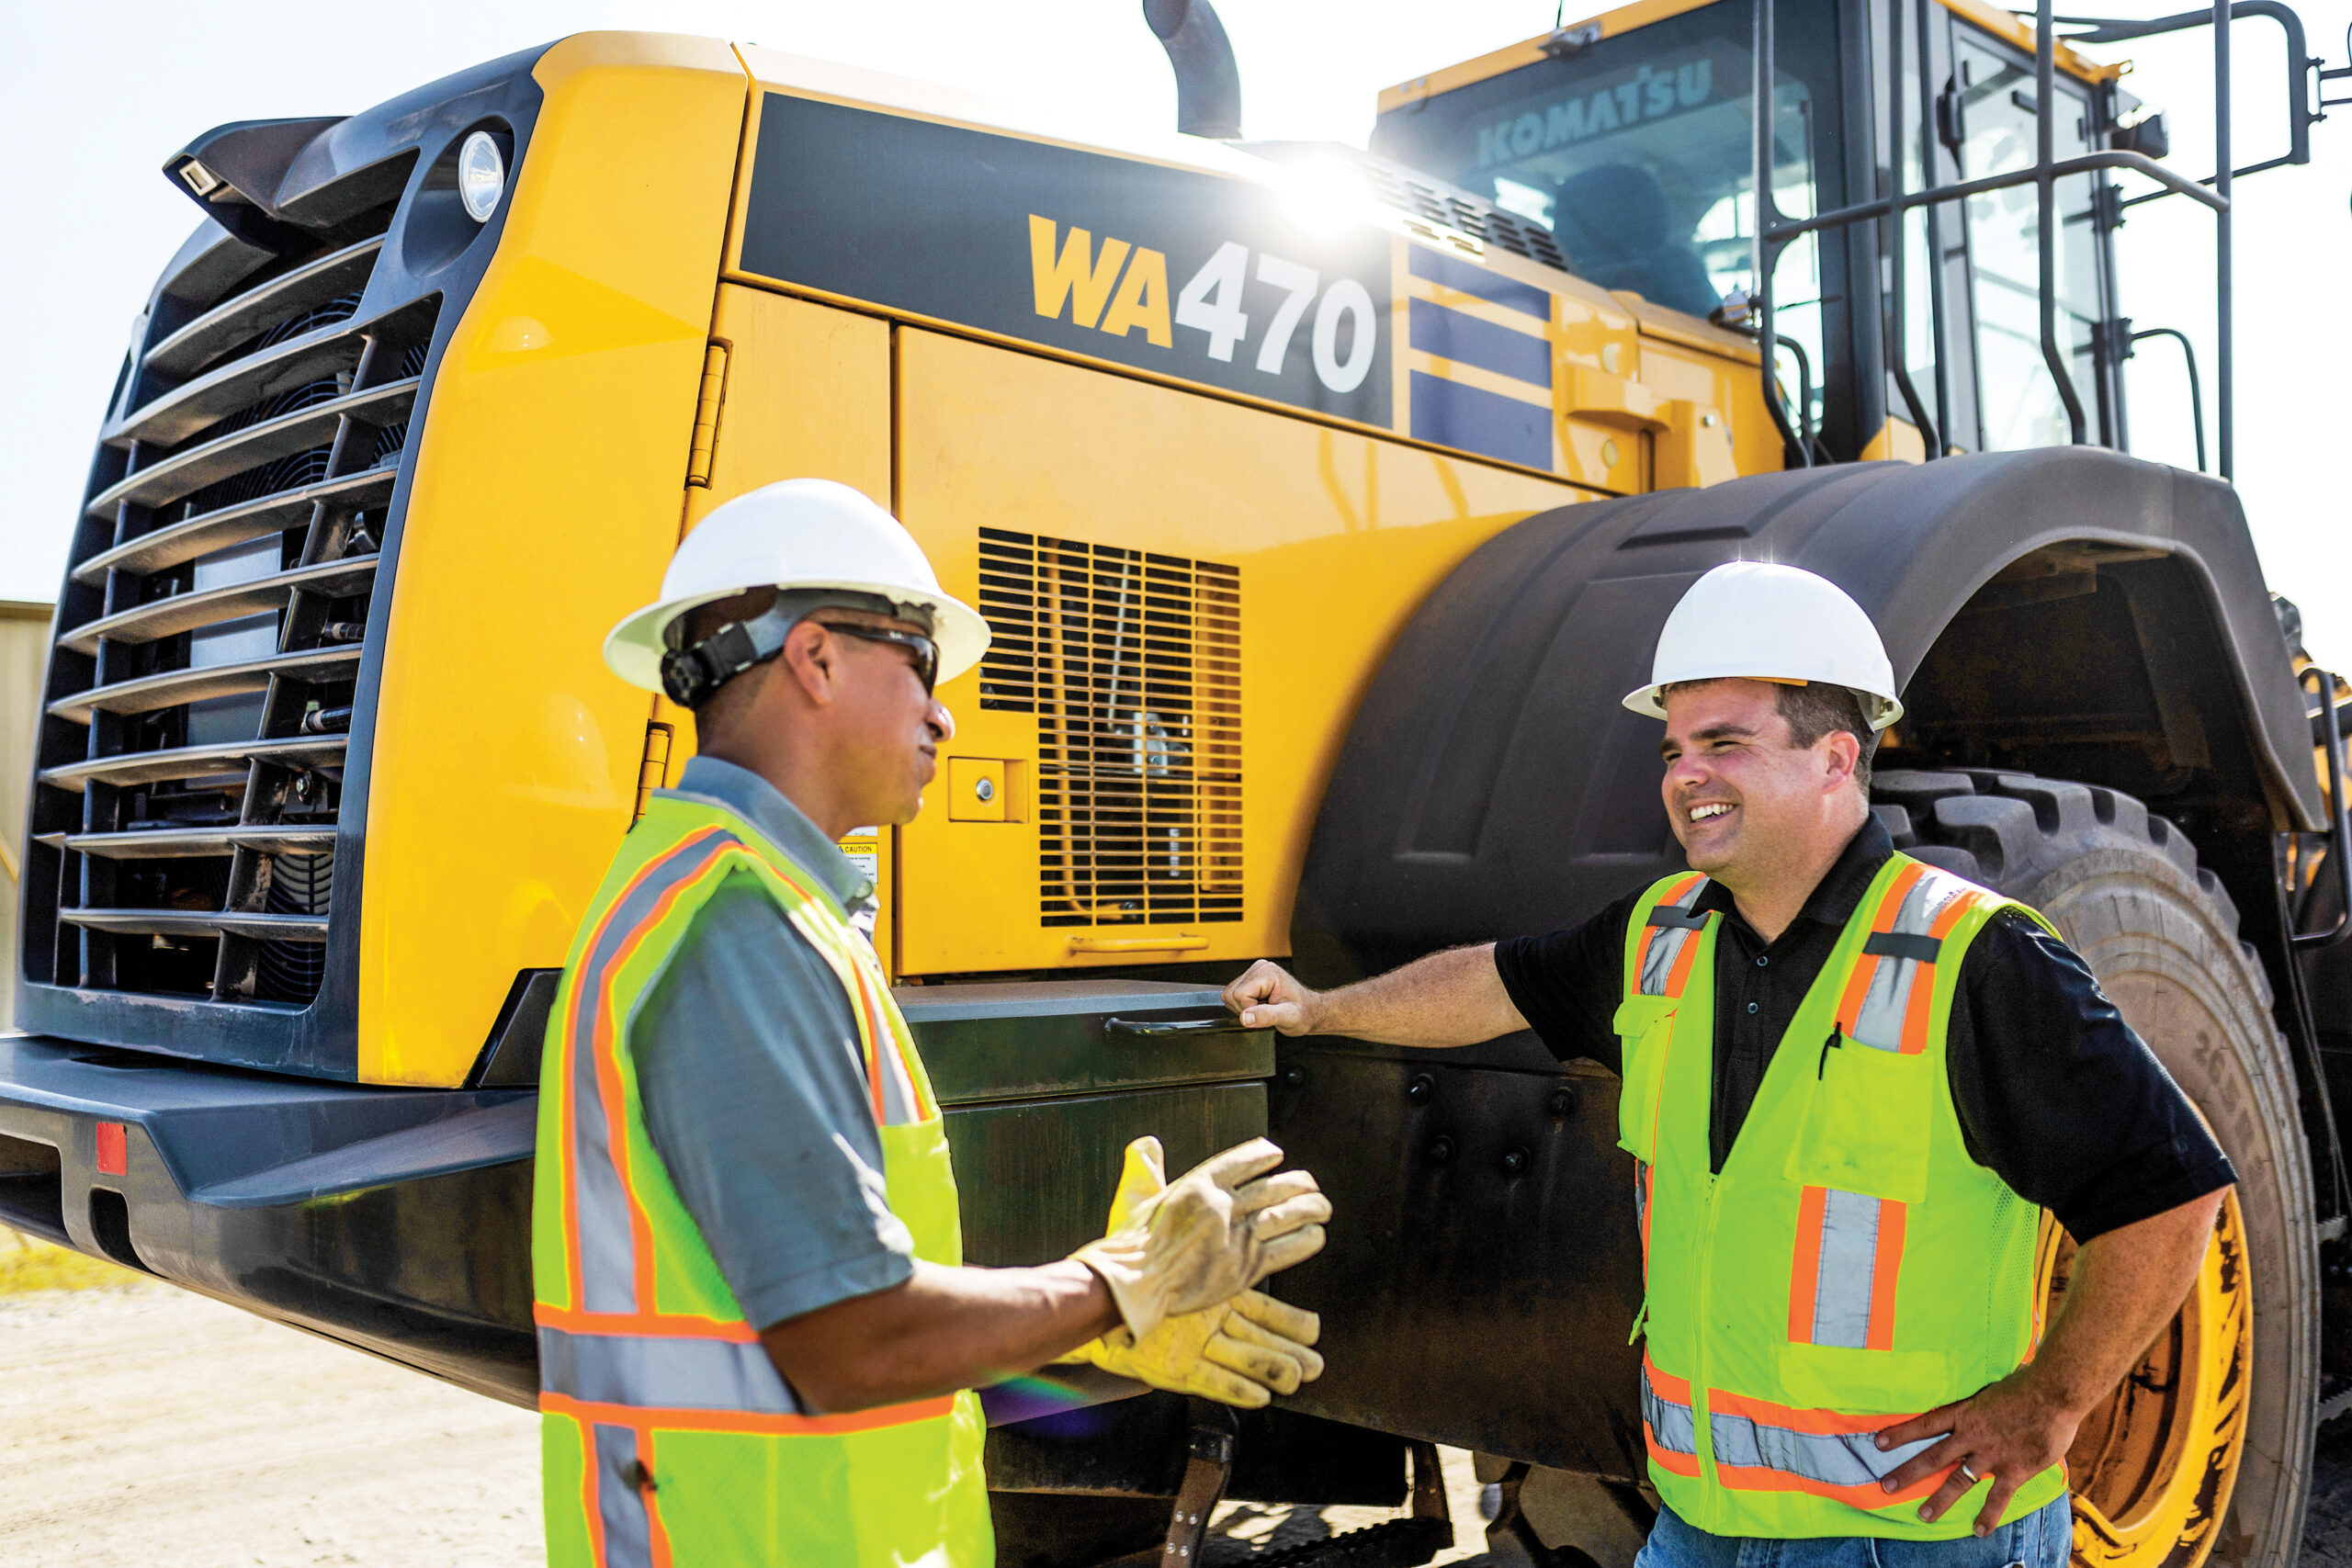 Two Construction Workers talking in front of Komatsu WA470 Wheel Loader